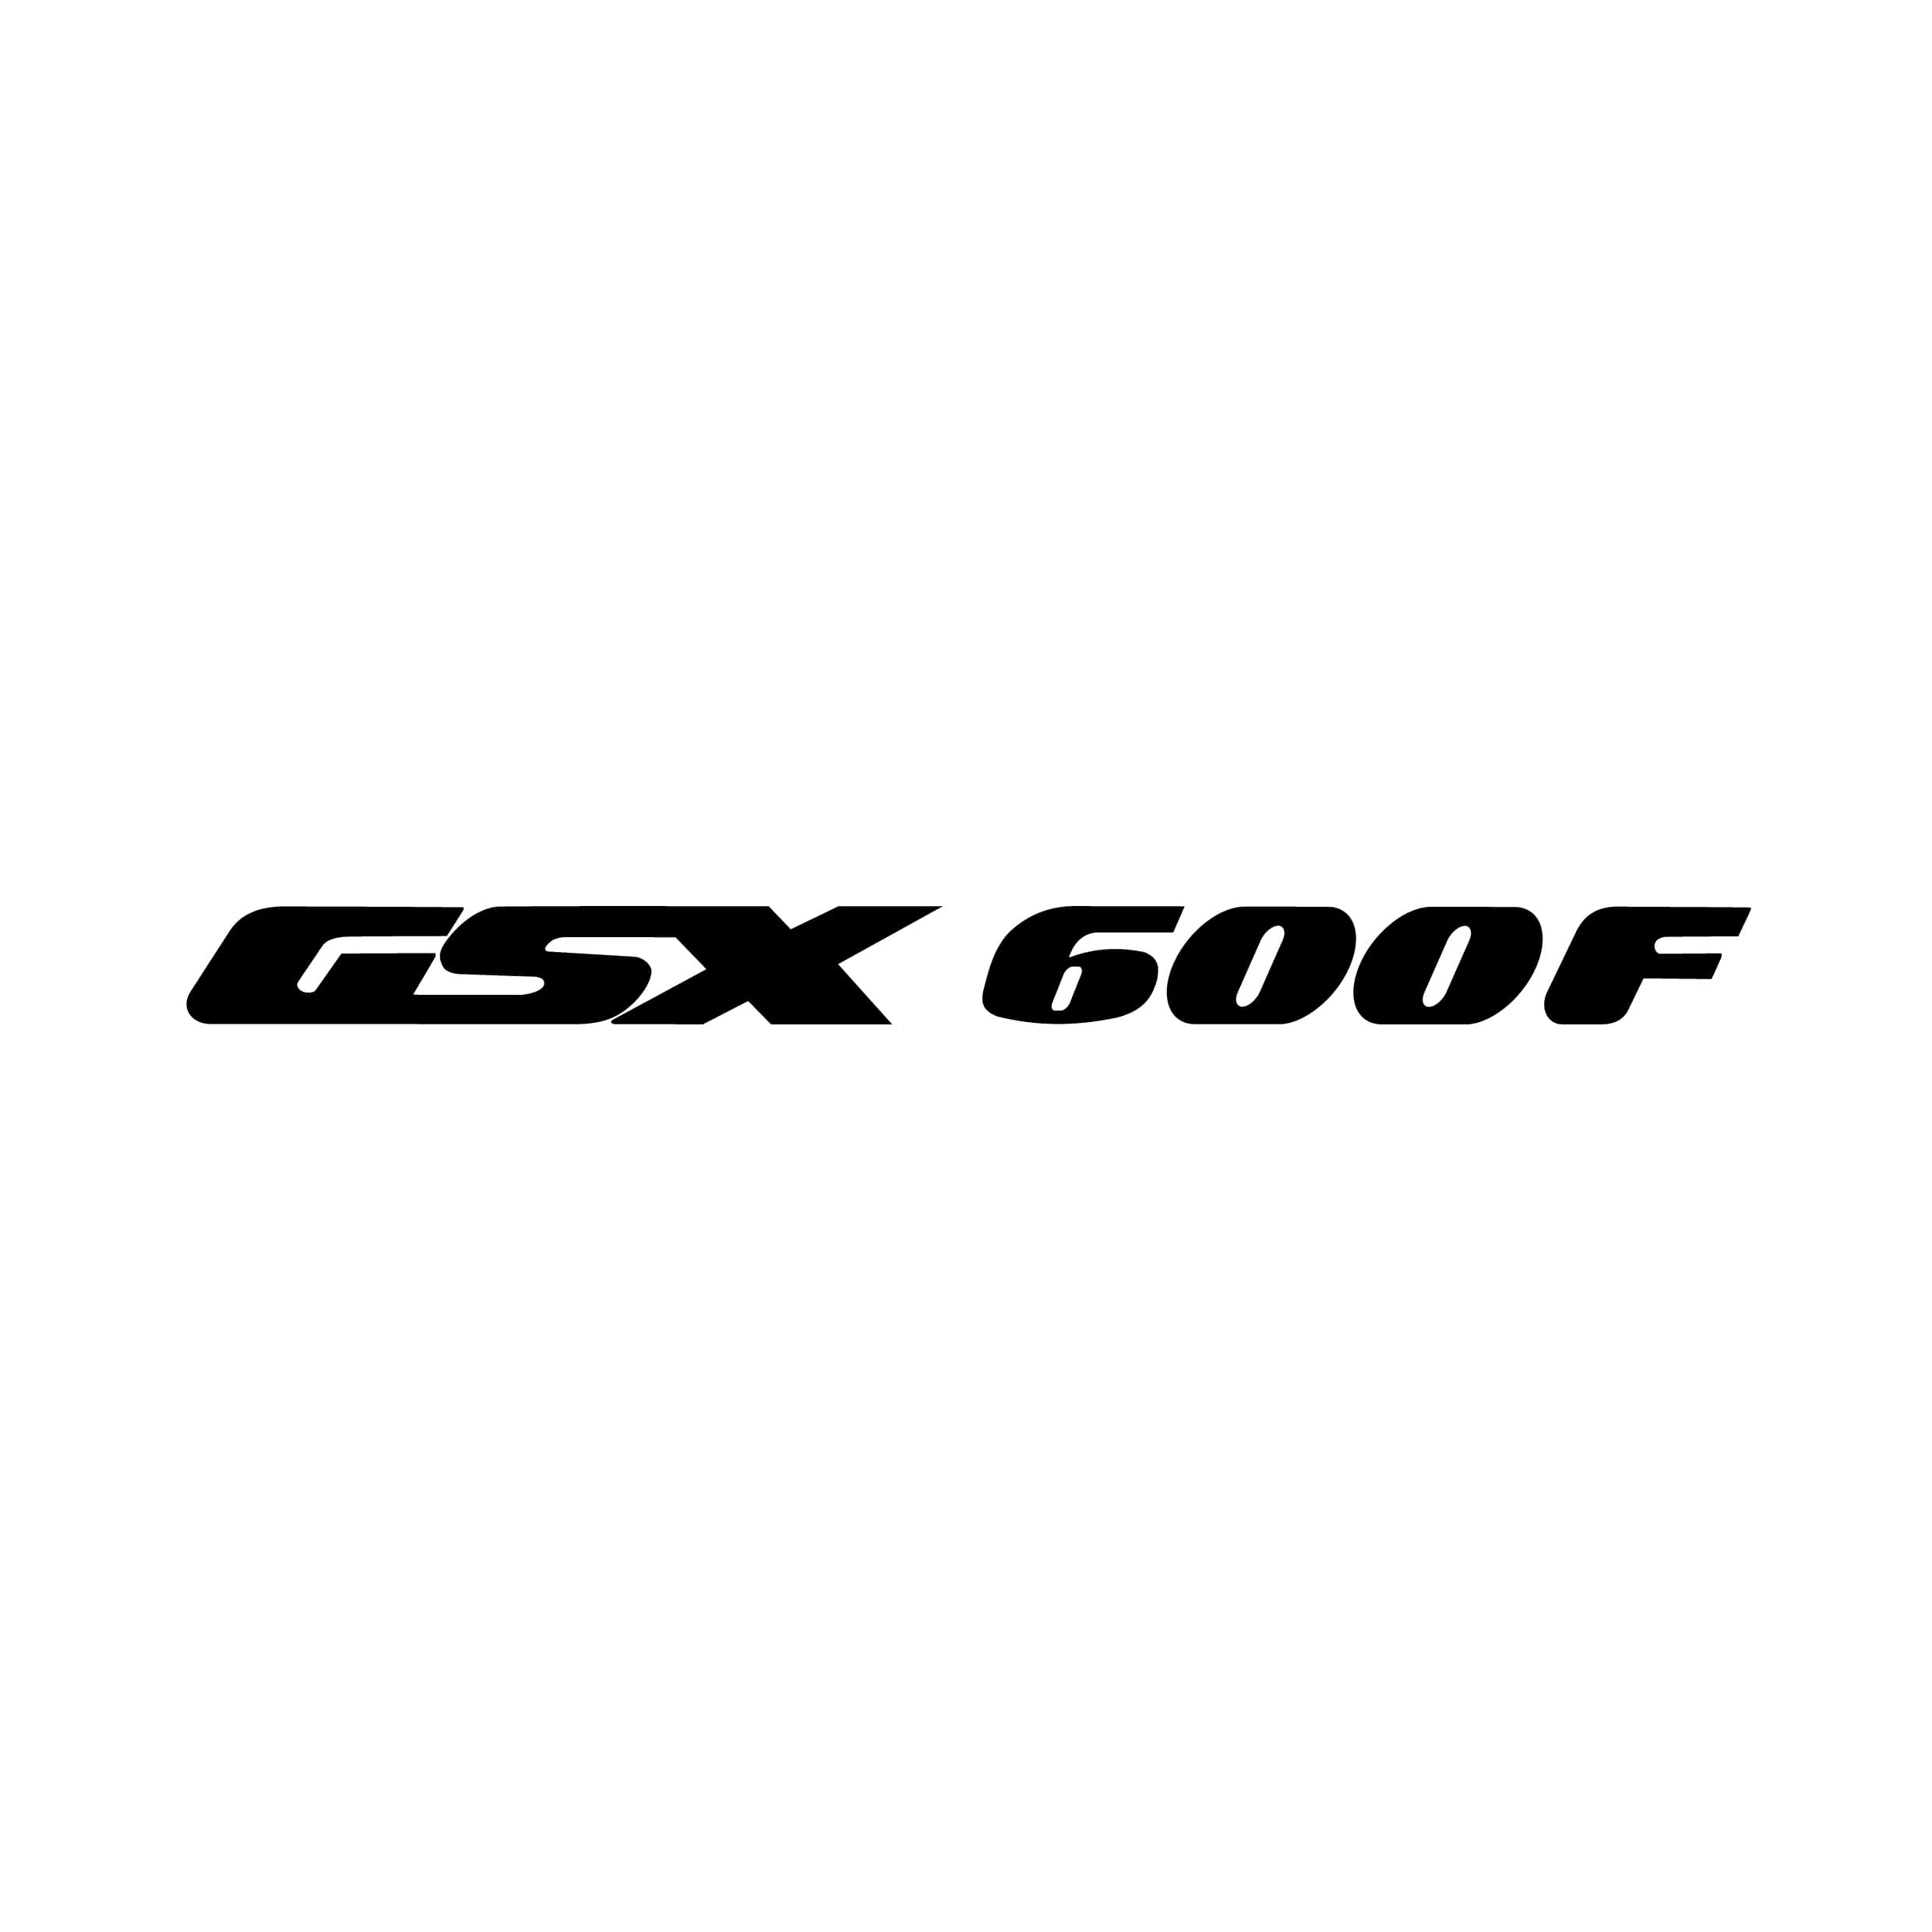 stickers-gsx-600f-suzuki-ref51-autocollant-moto-sticker-deux-roue-autocollants-decals-sponsors-tuning-sport-logo-bike-scooter-min